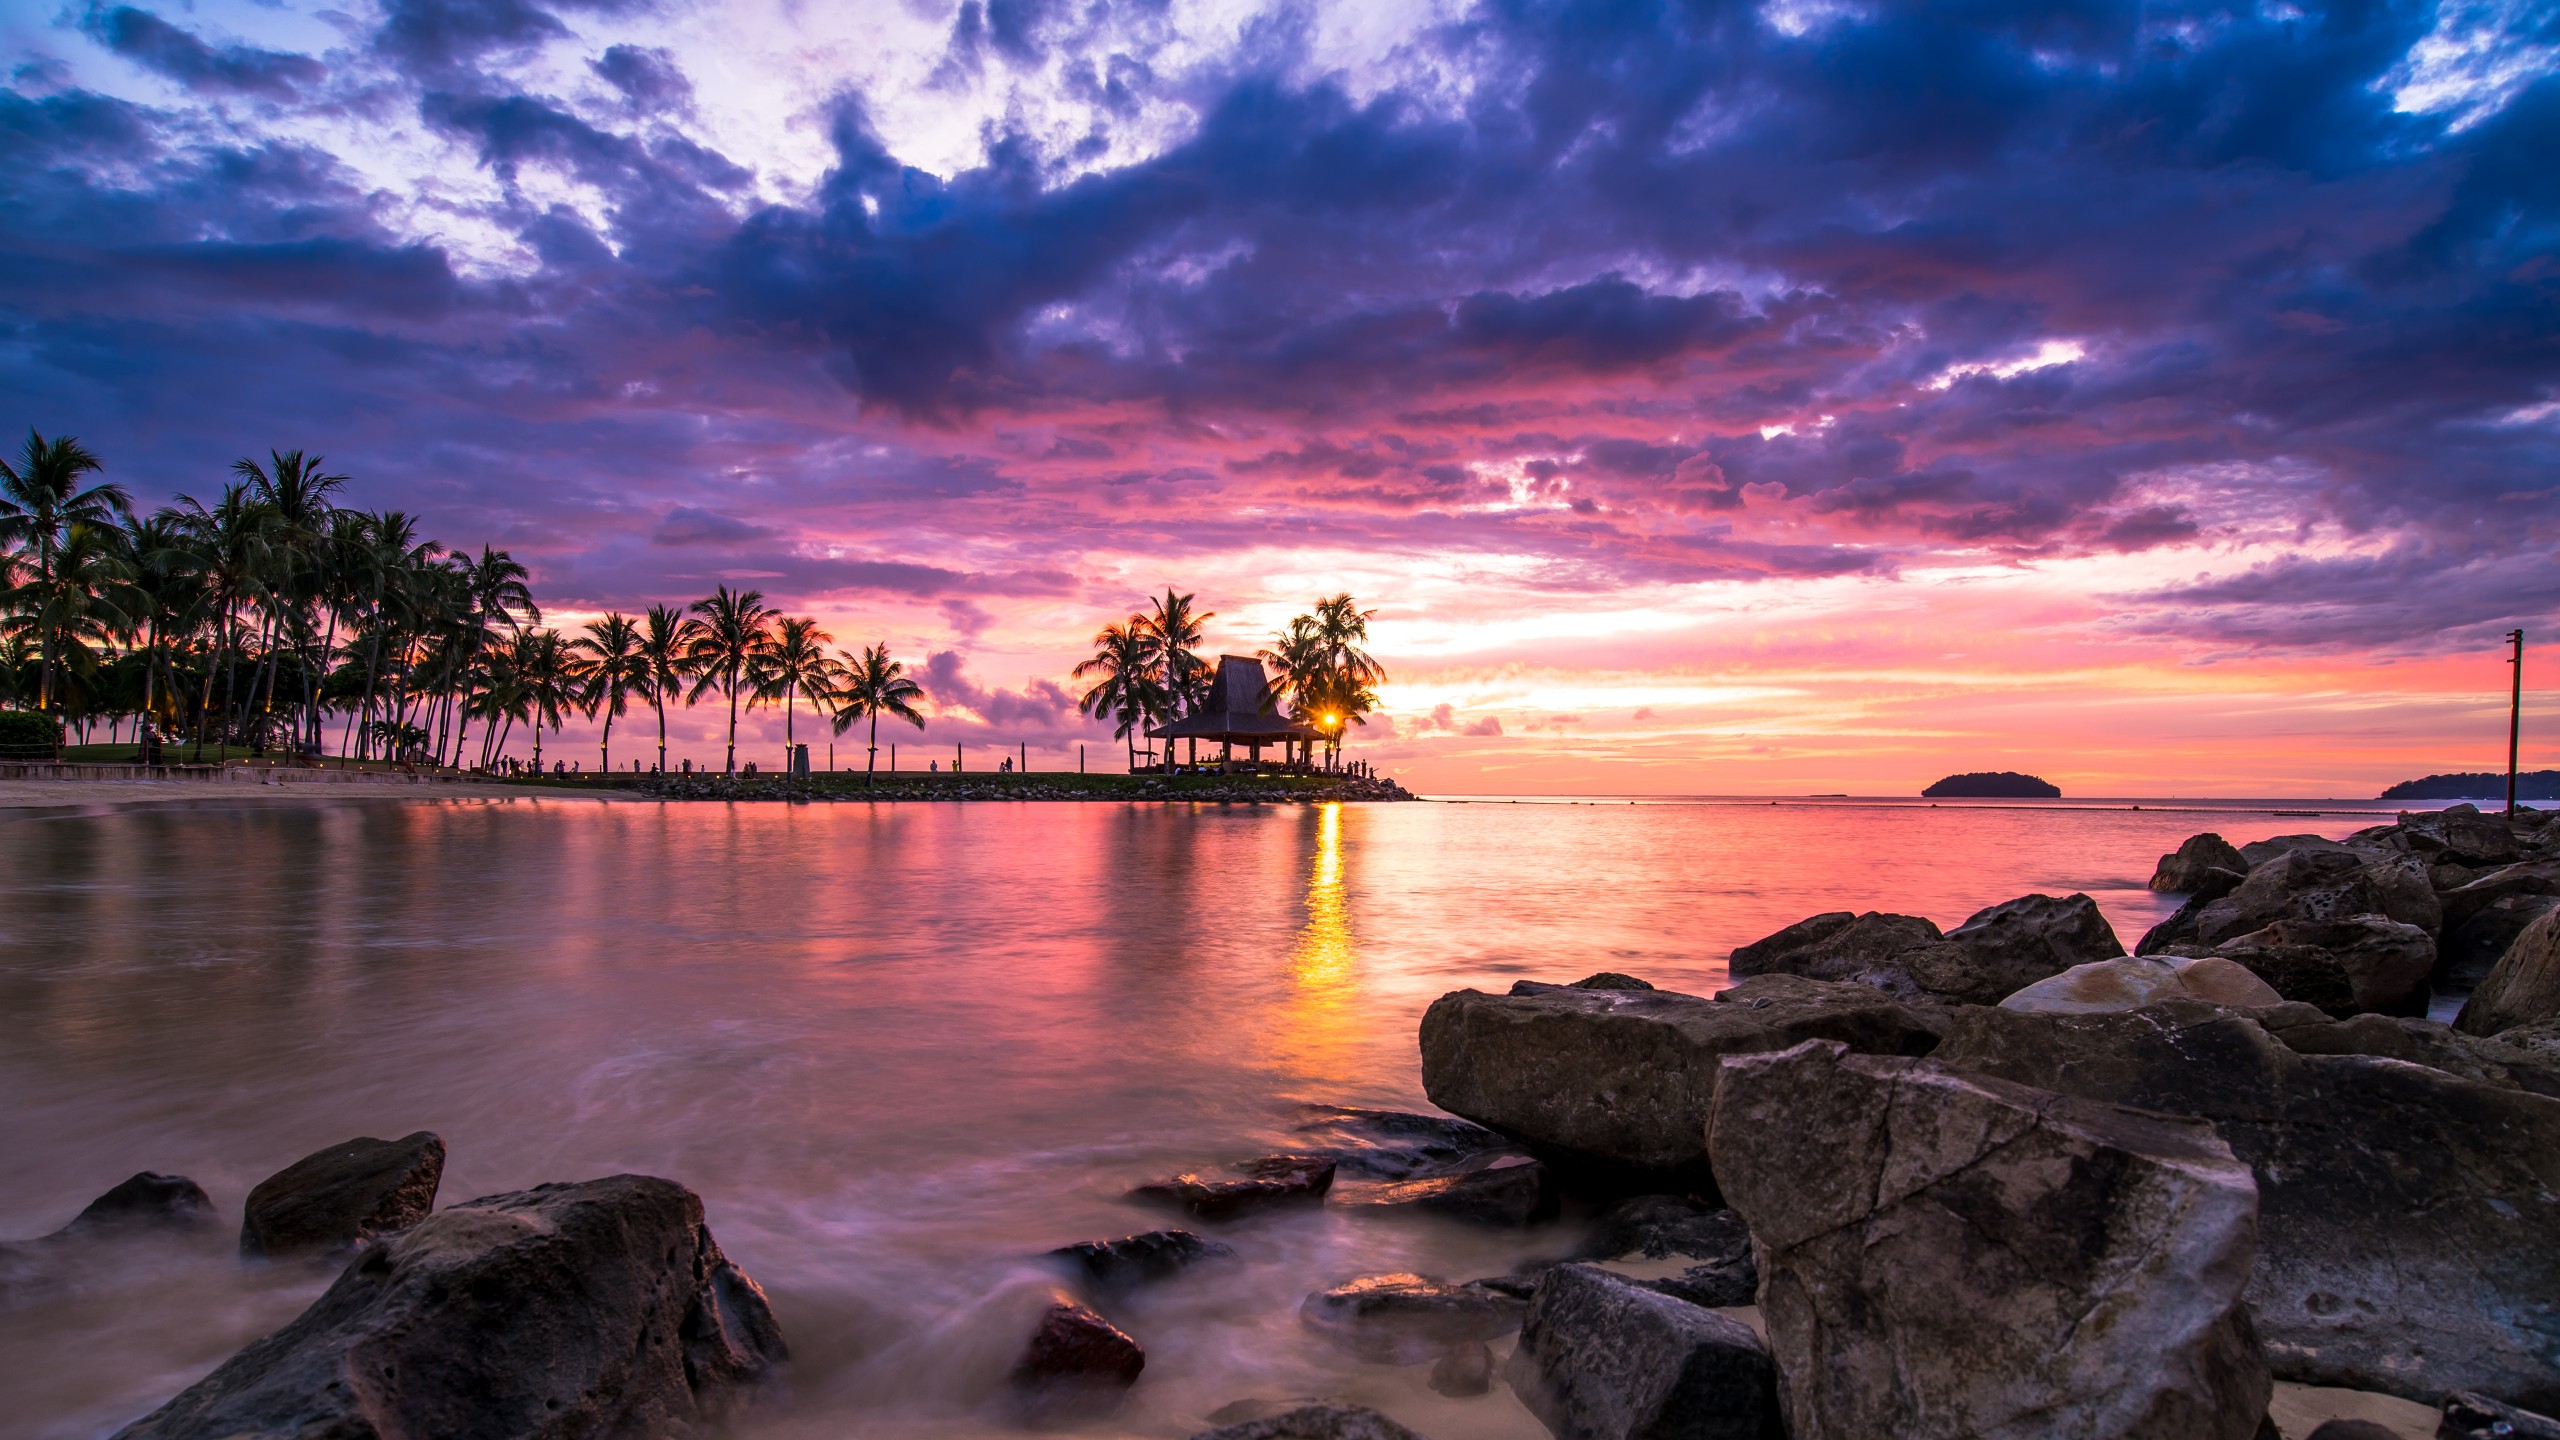 General 2560x1440 beach landscape sunrise sea water palm trees low light horizon clouds